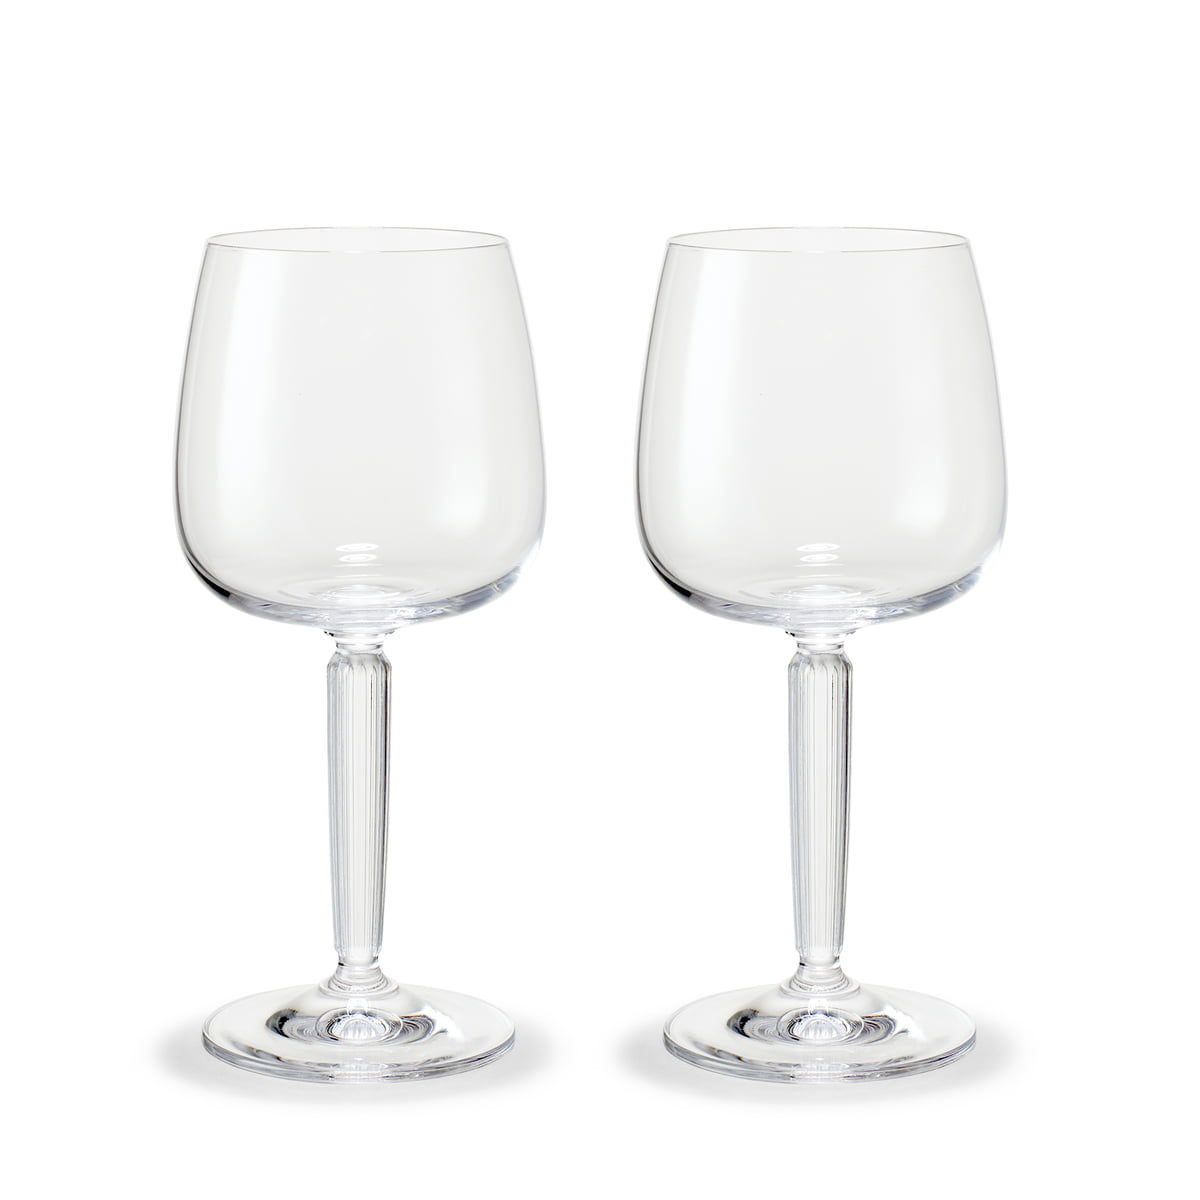 Kähler Design - Hammershøi wine glasses